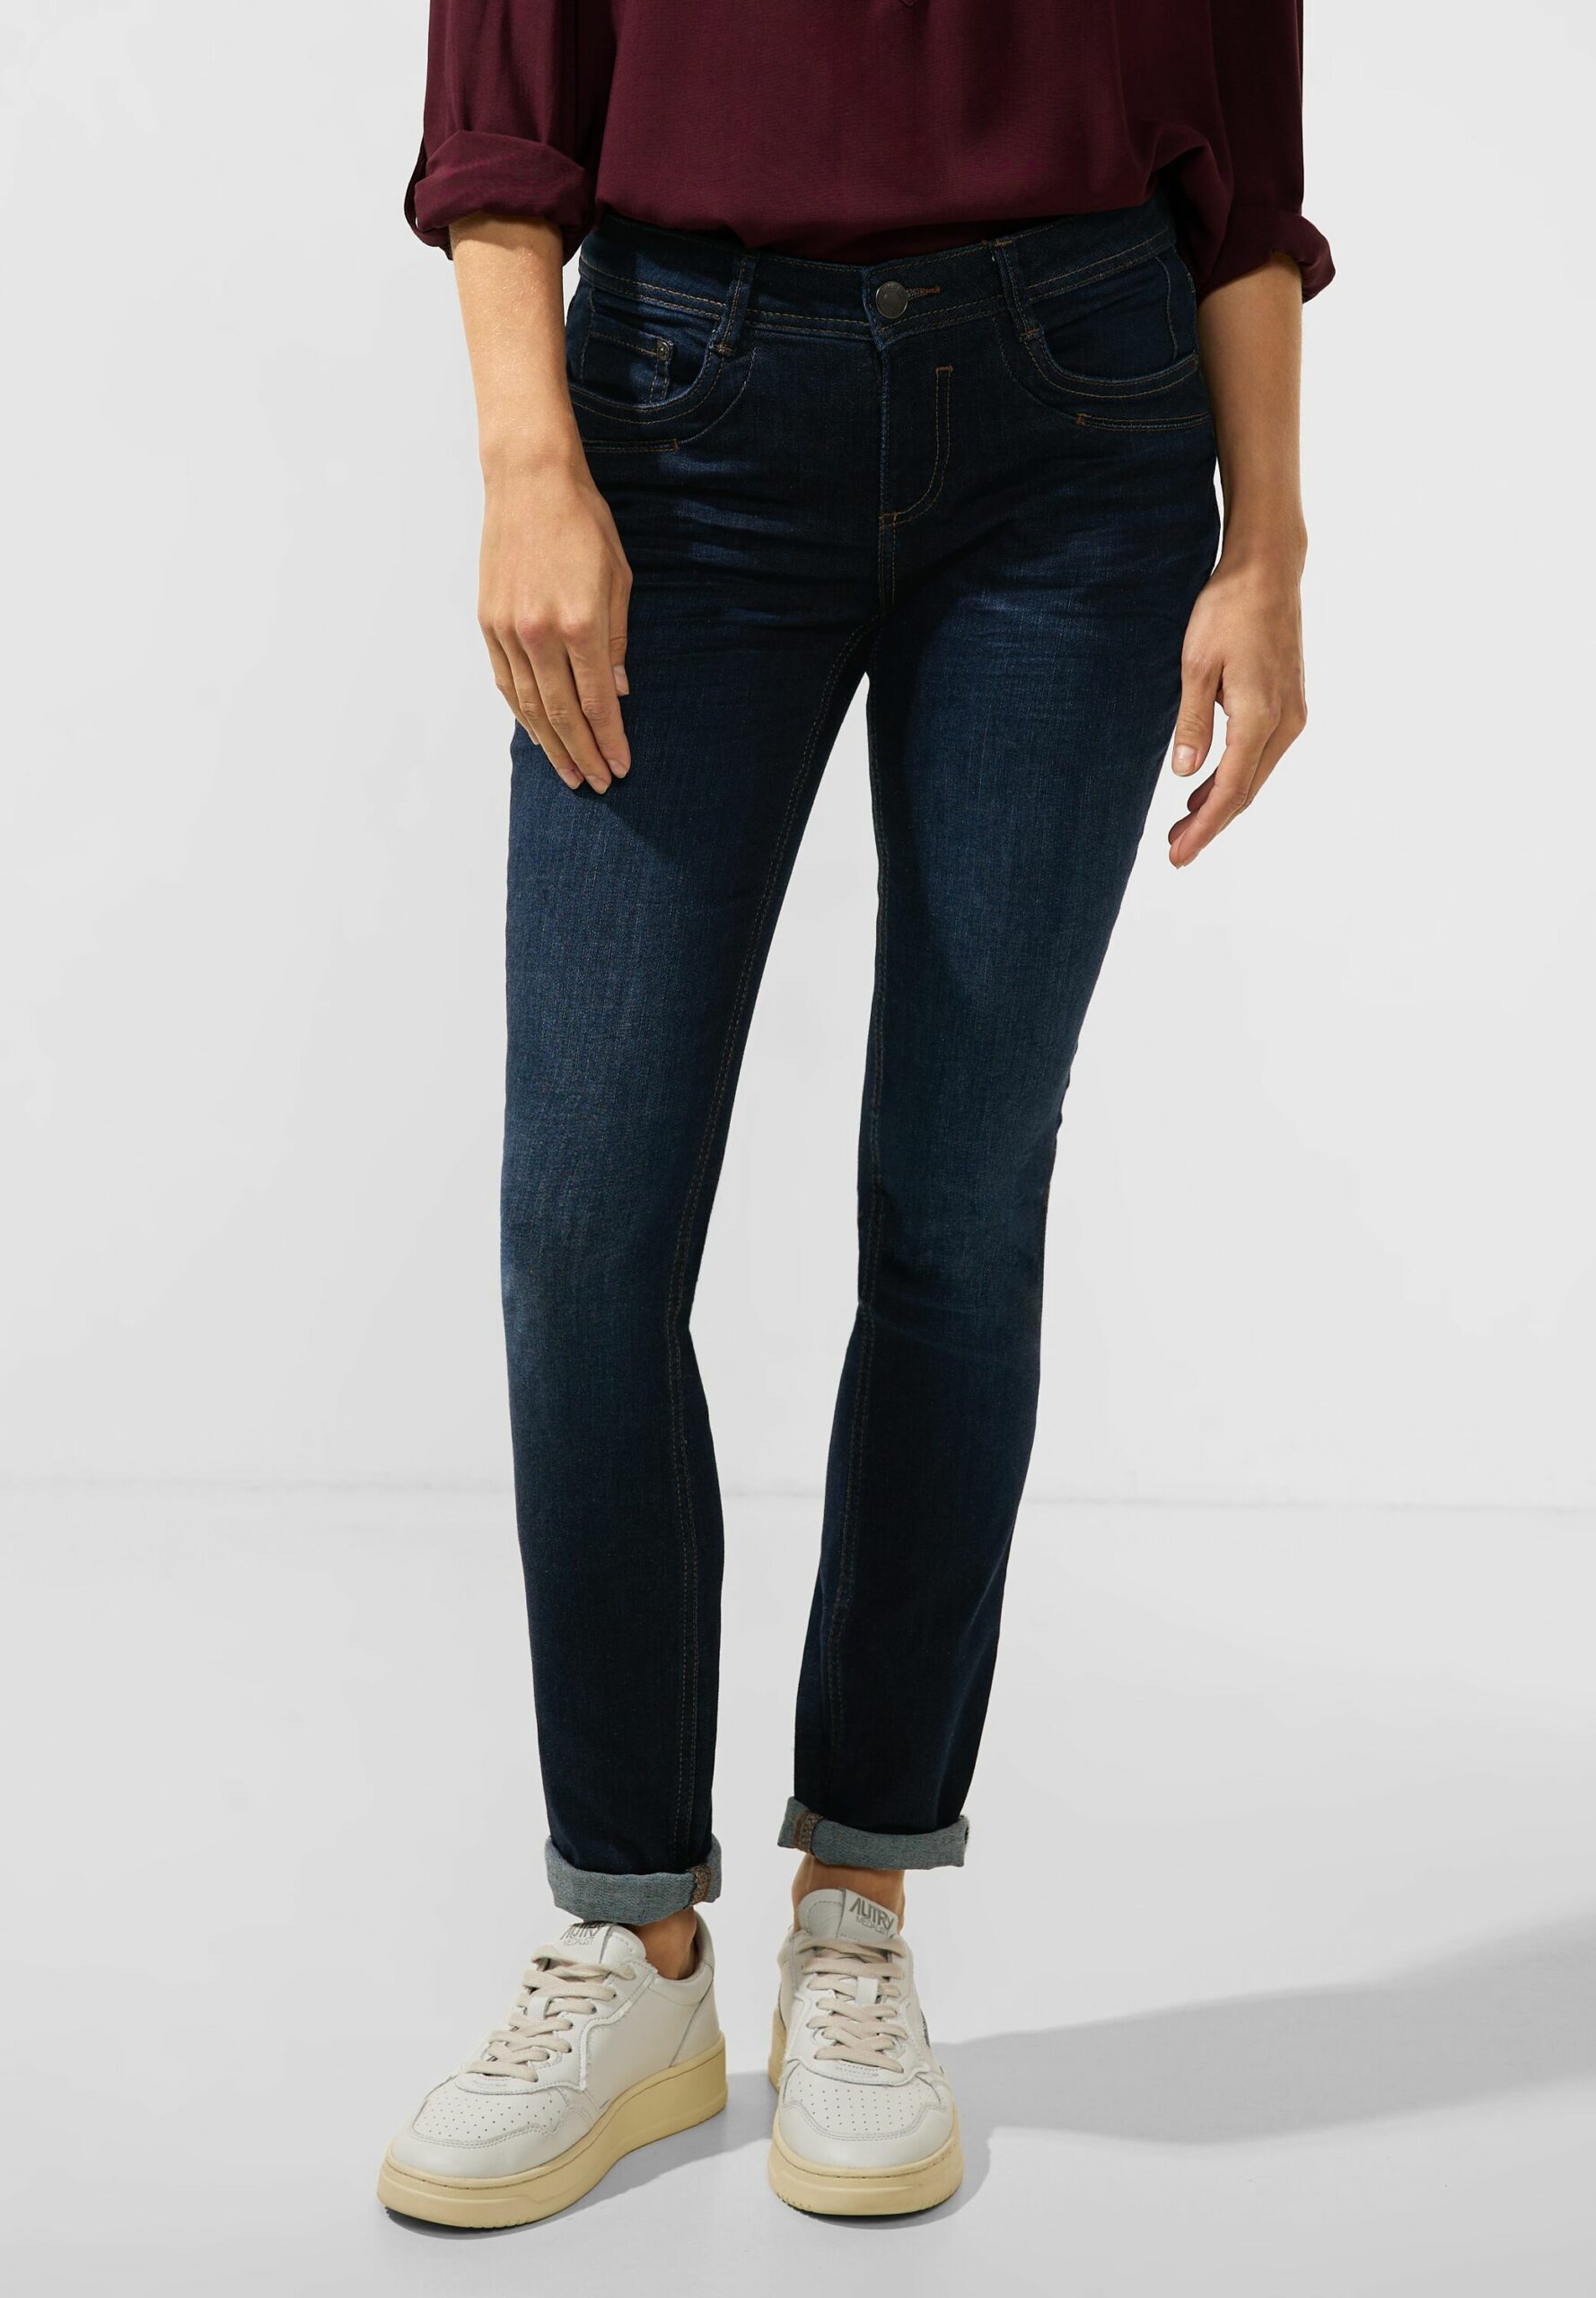 Modehaus Street One Kamlage - Fit Damen Jeans Webshop Casual